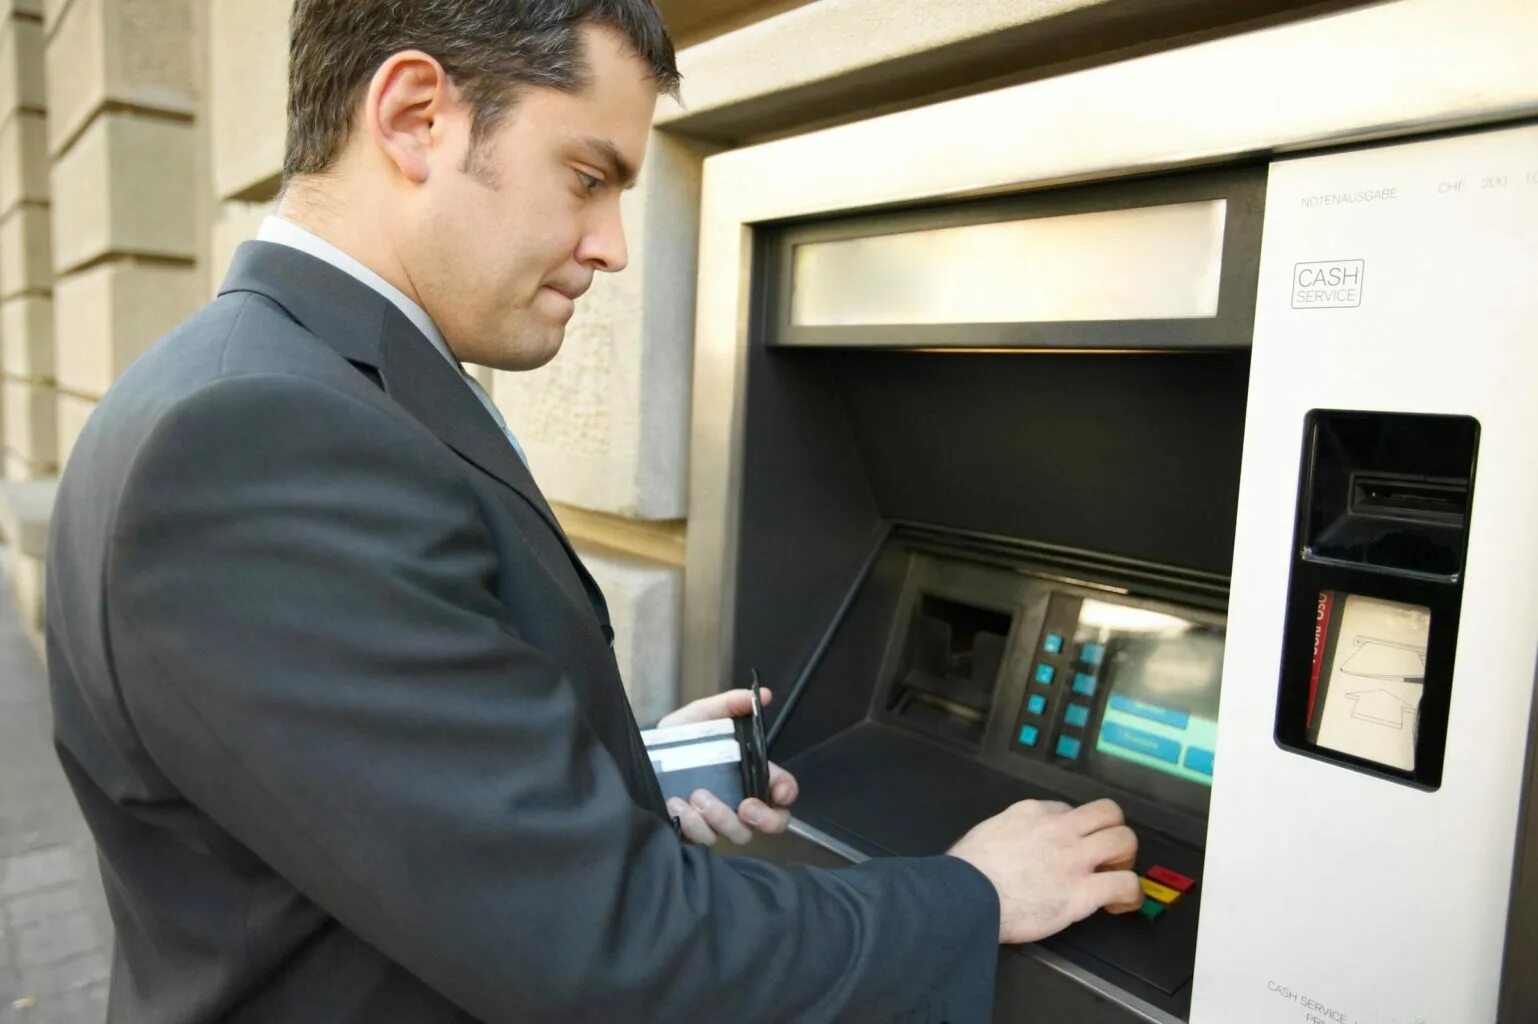 Сними получи. Человек у банкомата. Мужчина у банкомата. Человек возле банкомата. Деньги в банкомате.